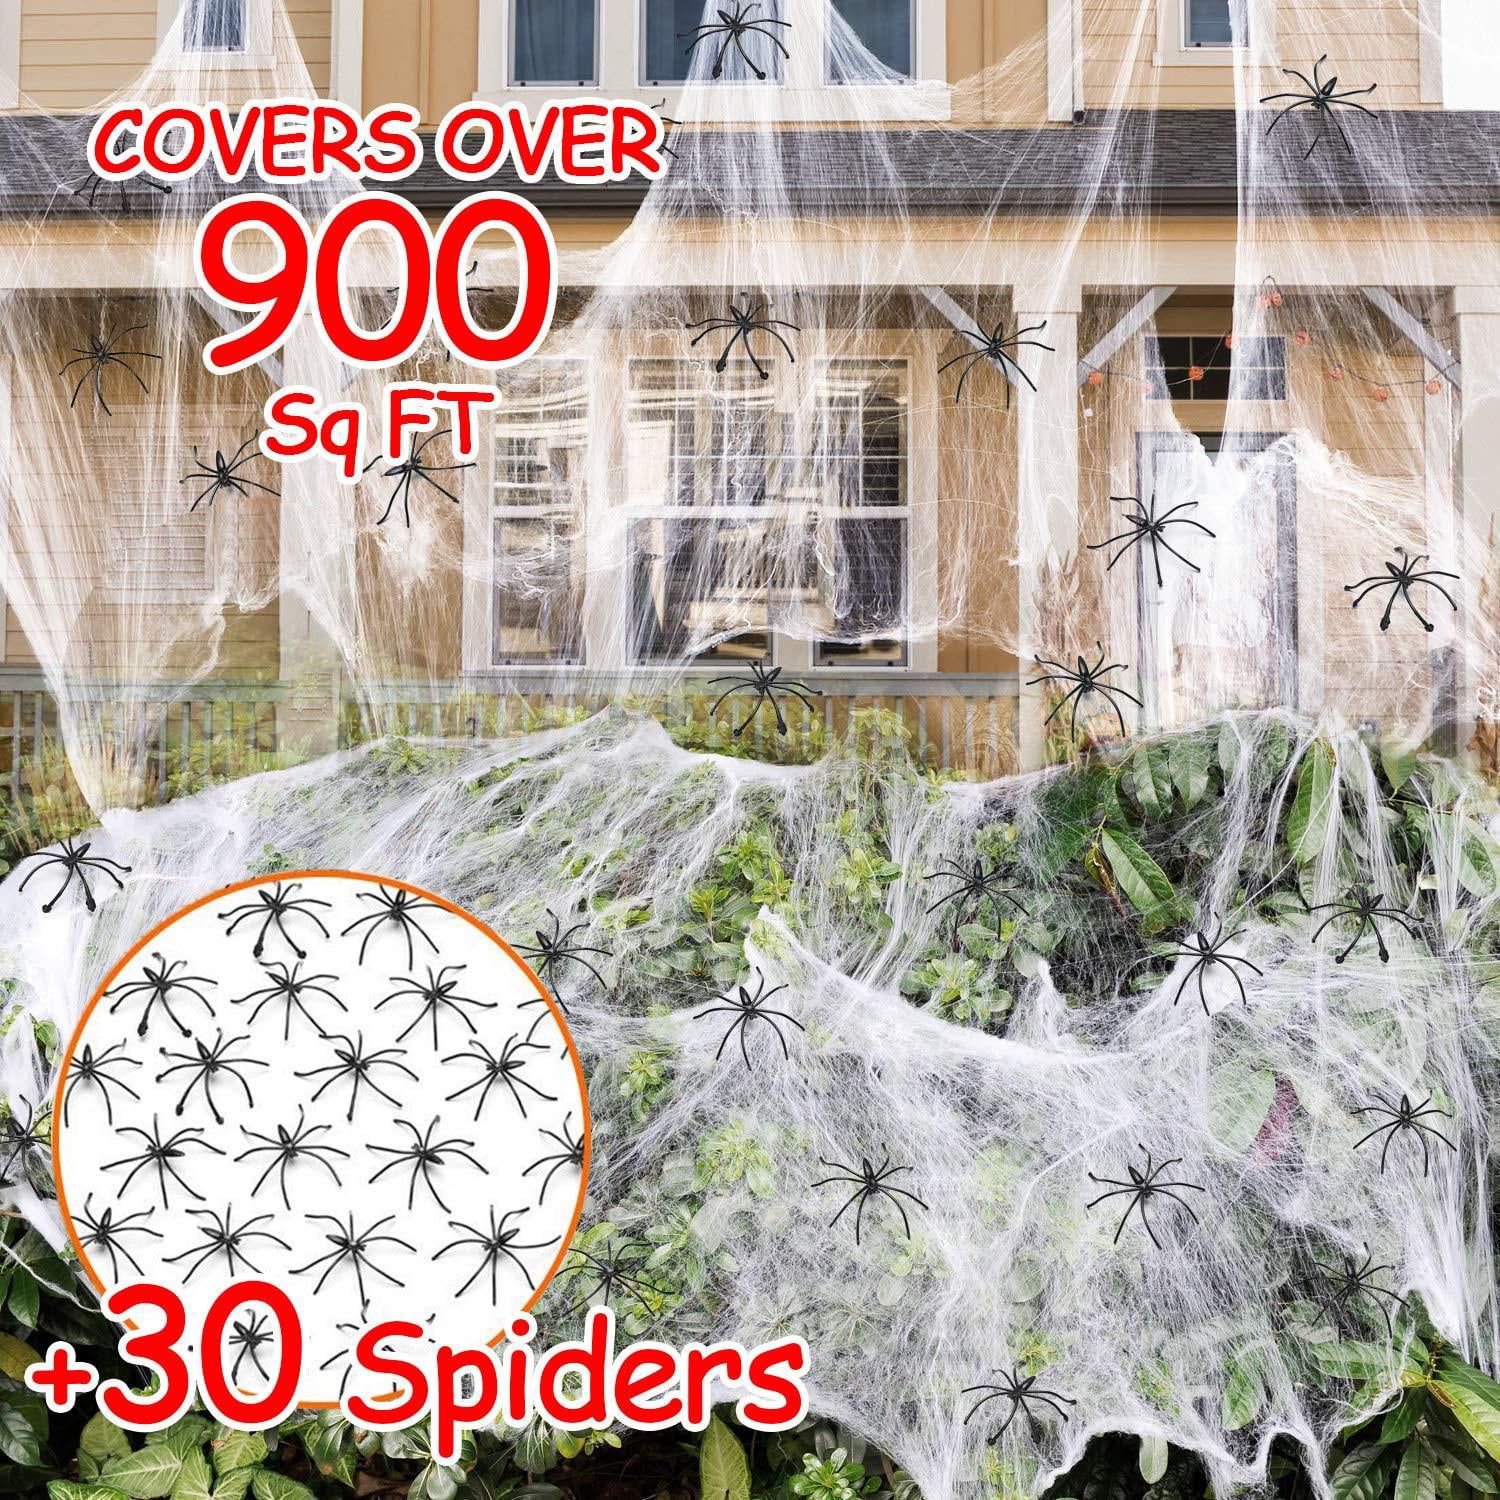 900 sqft Spider Webs Halloween Decorations Bonus with 30 Fake Spiders, Super Stretch Cobwebs for ... | Walmart (US)